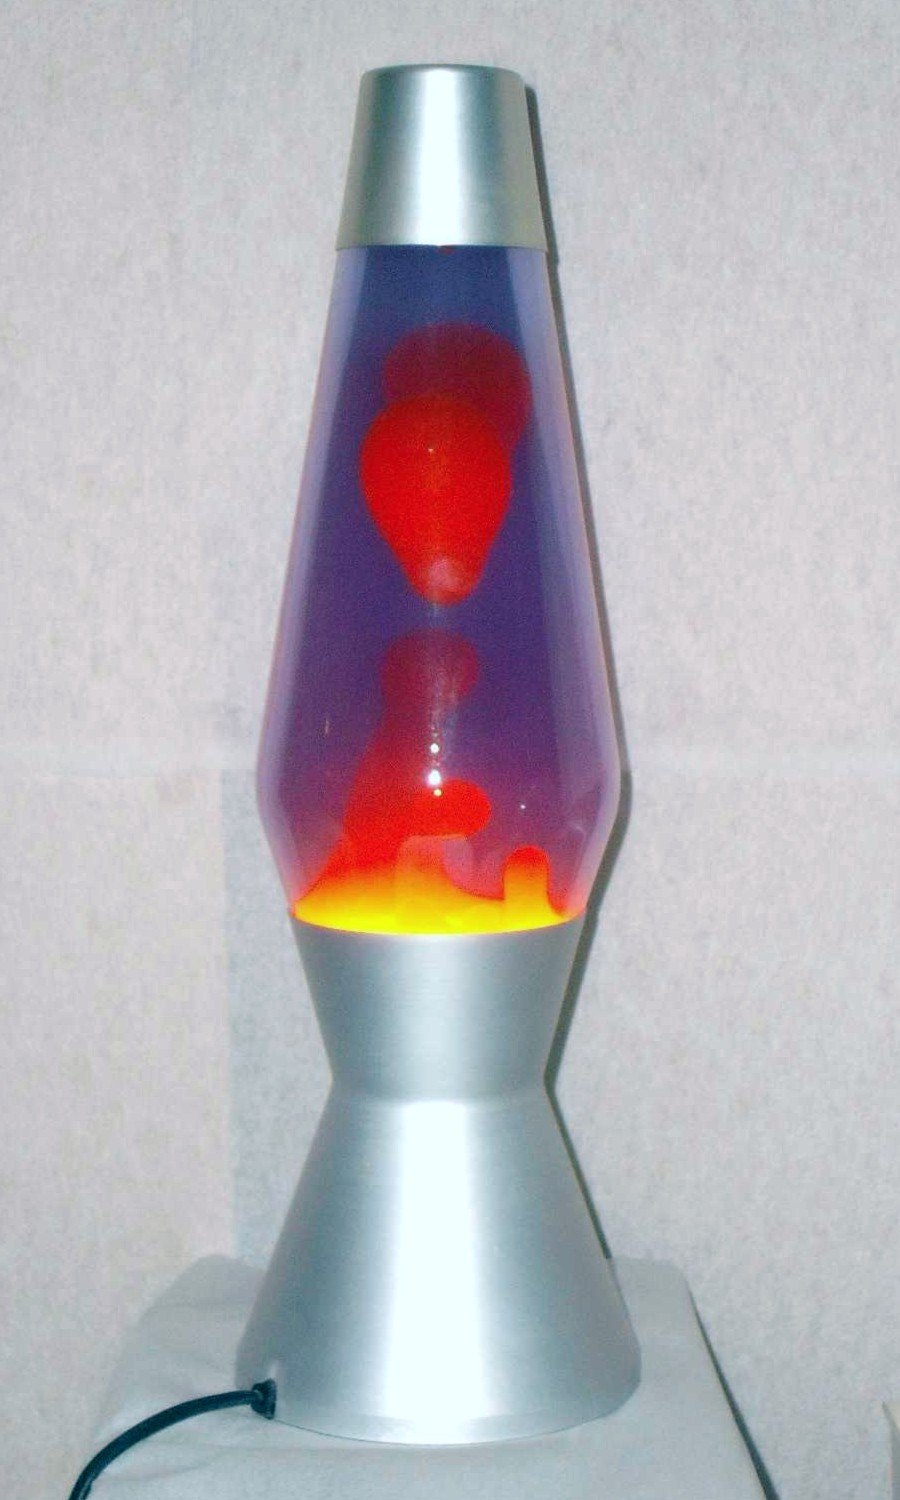 An old Mathmos brand Lava Lamp